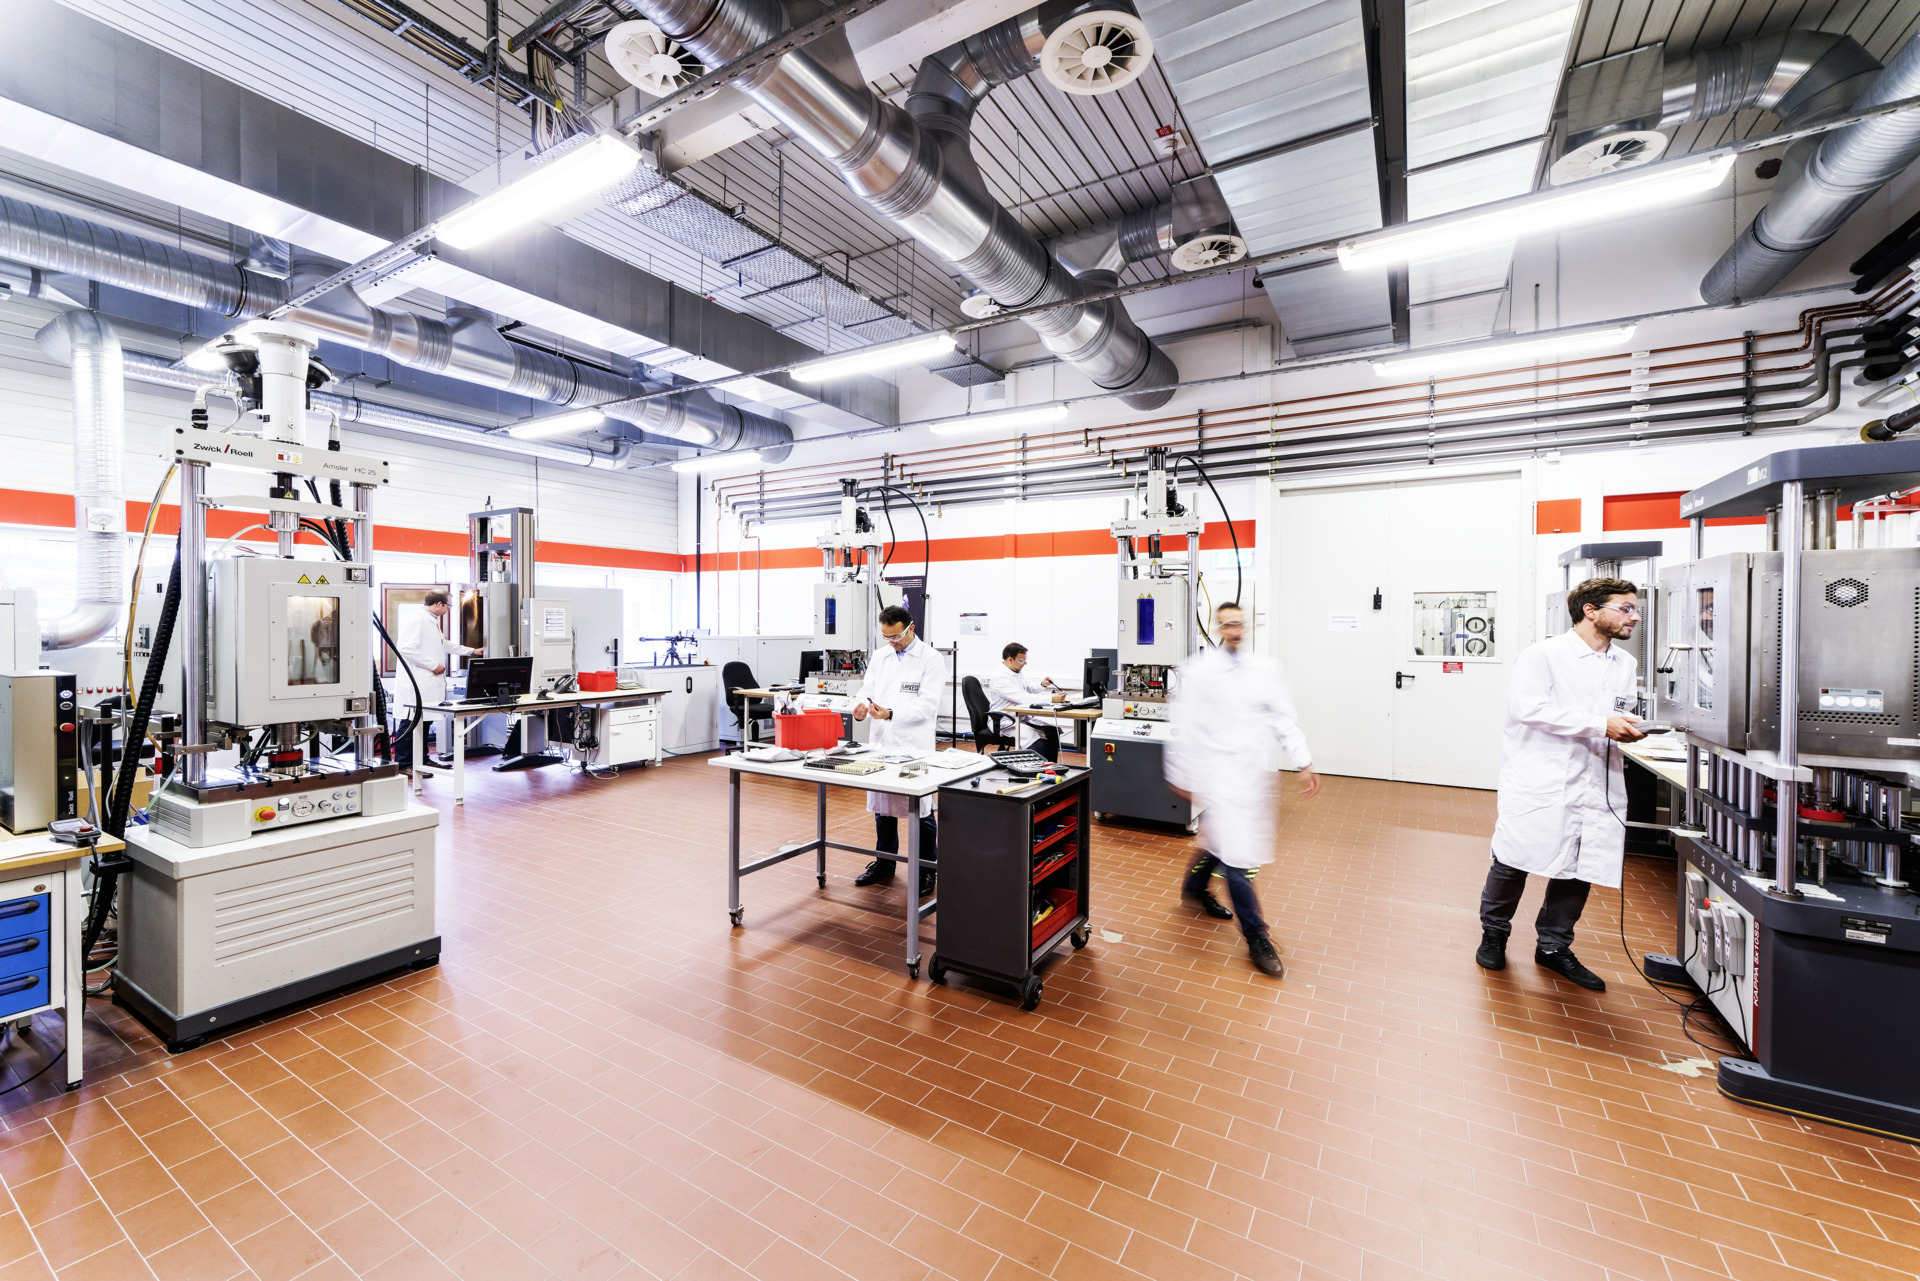 The LANXESS Technical Center for Engineering Plastics in Dormagen, Germany